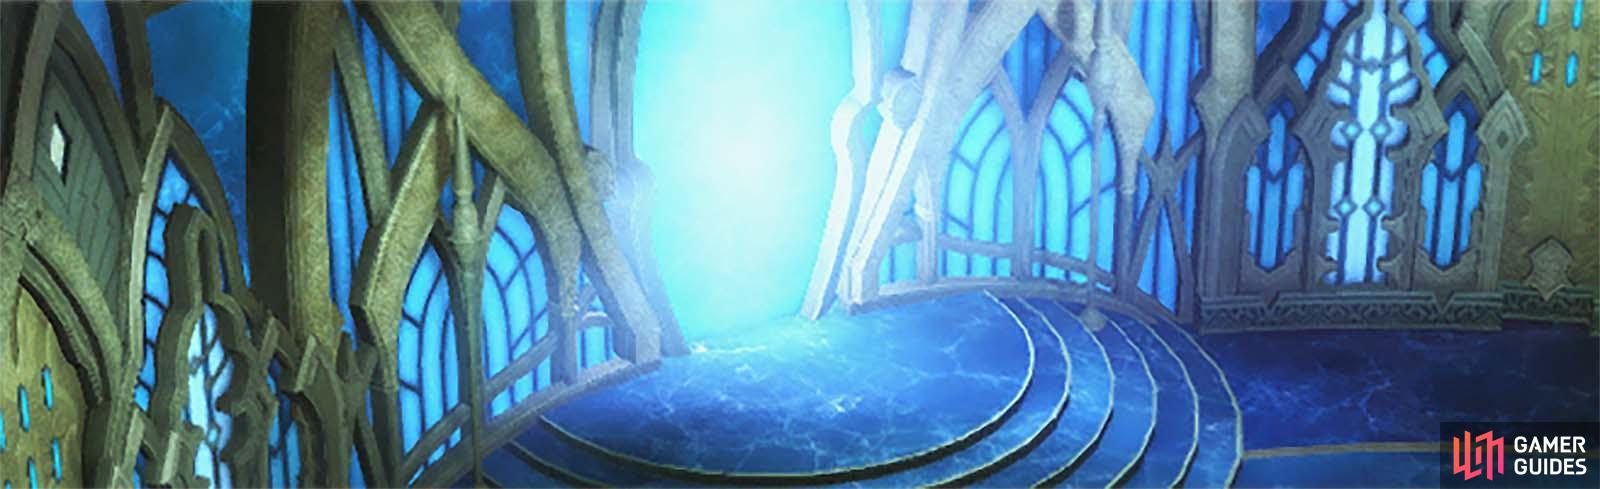 Final Fantasy XIV: Endwalker Screenshot